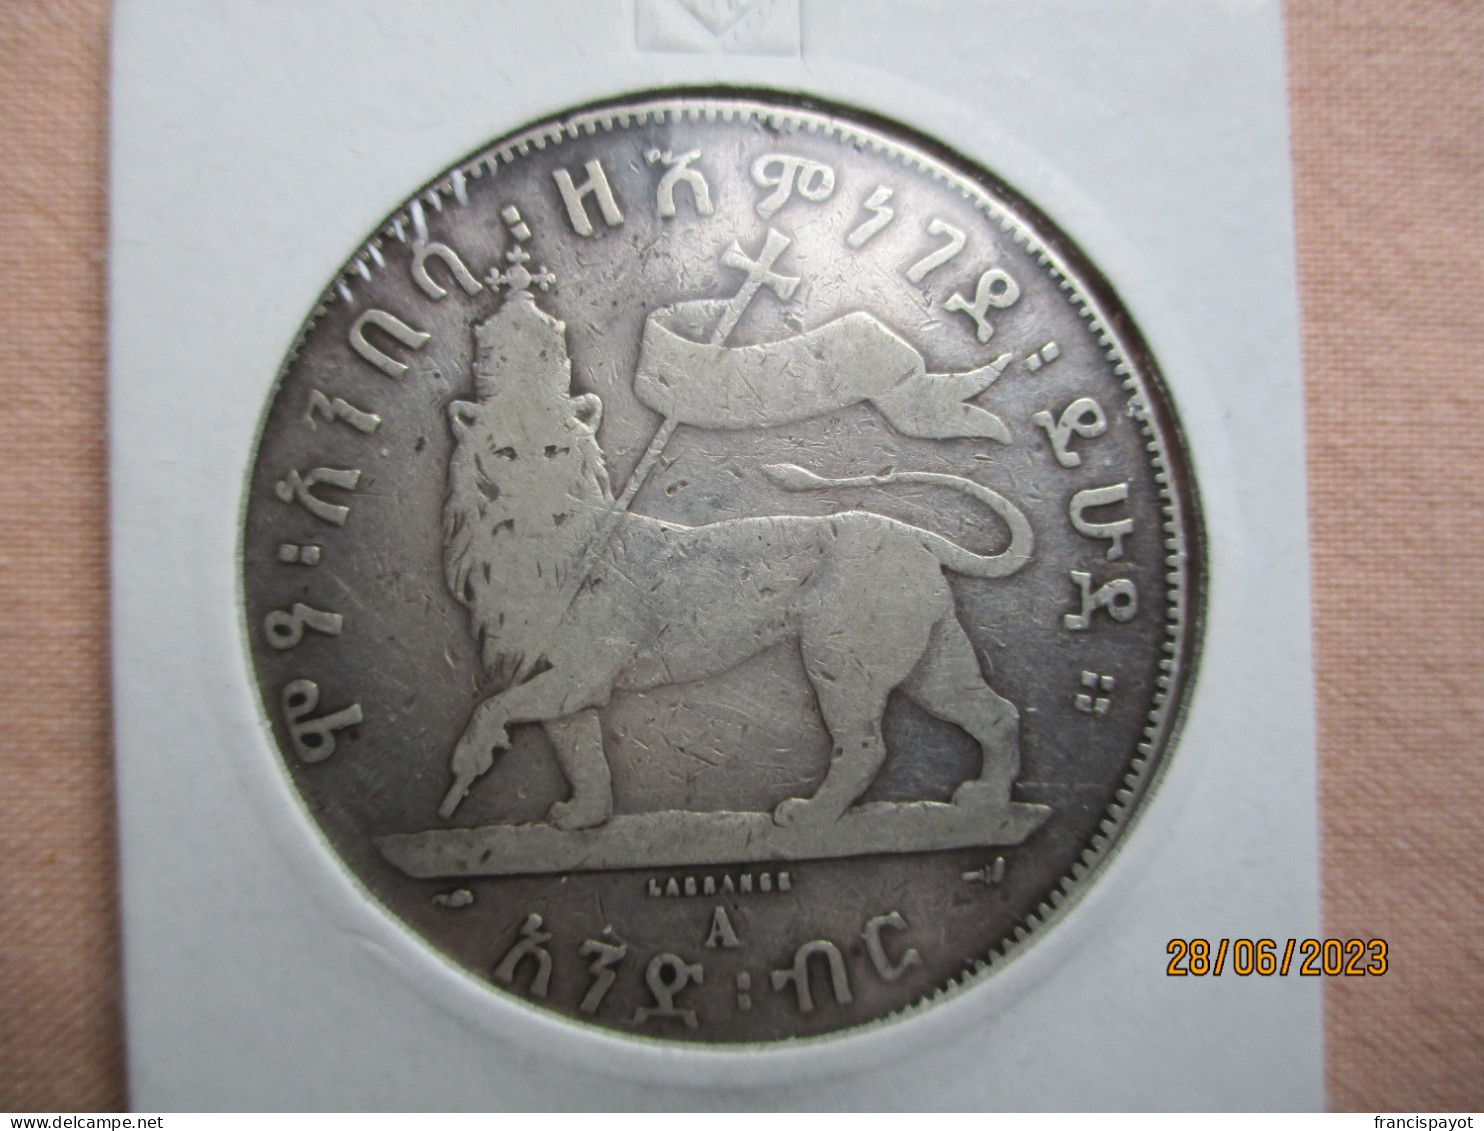 Ethiopia Menelik 1 Birr 1889 EE (1896/97) - Aethiopien